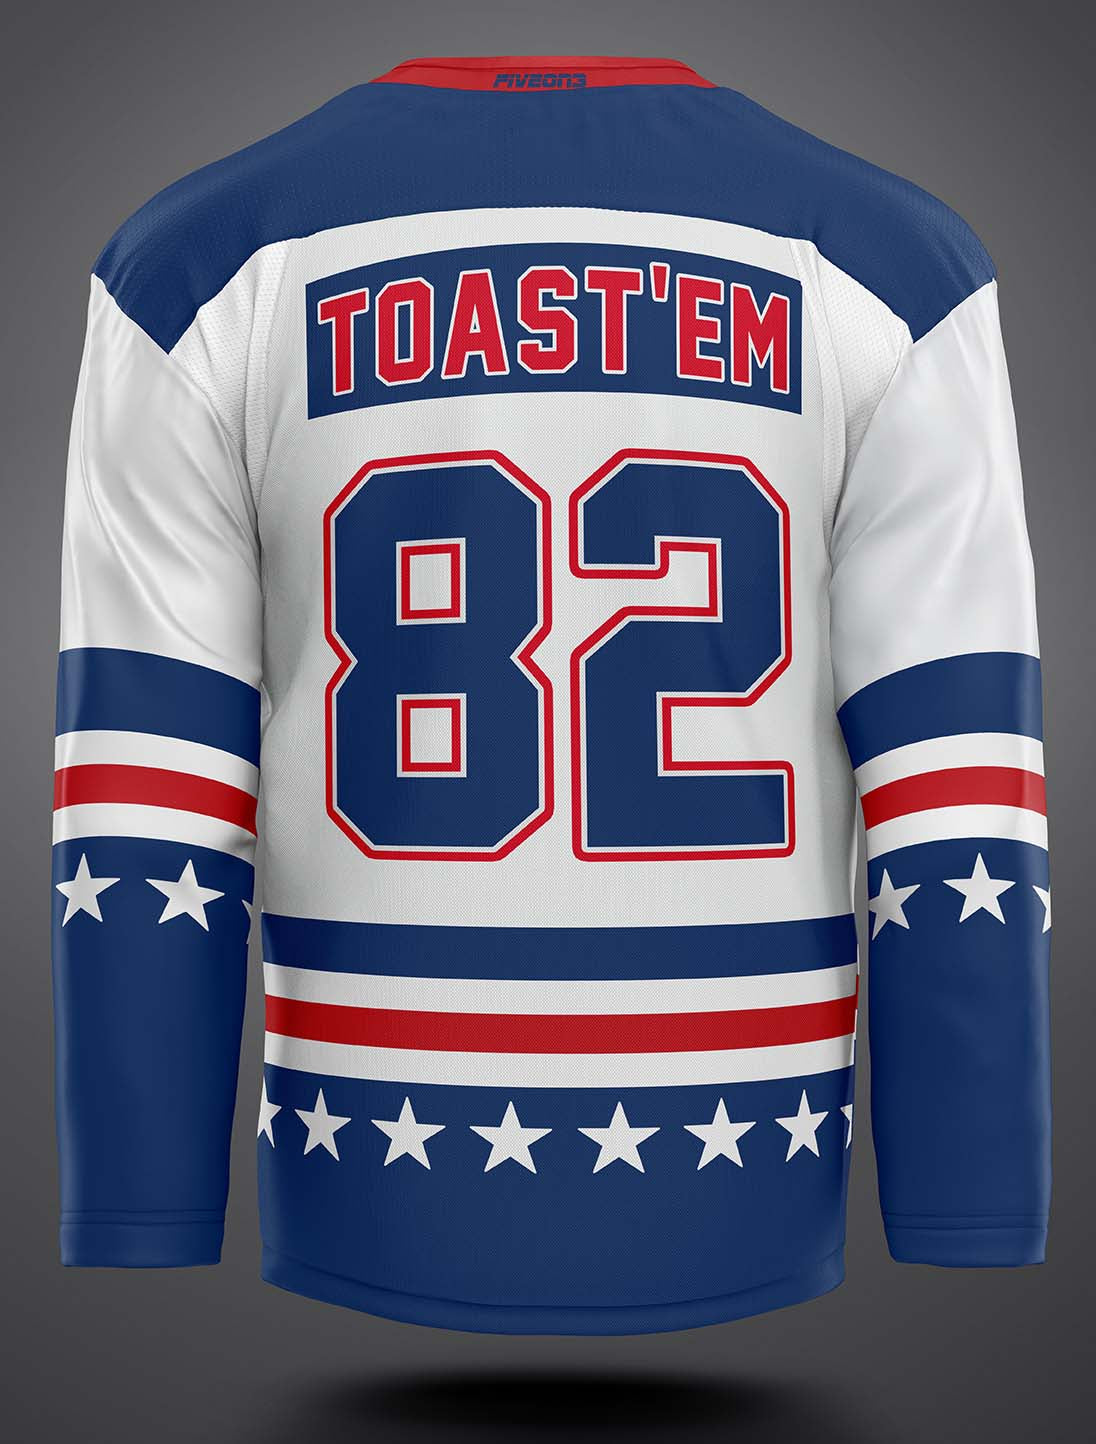 Toast'em Hockey Jersey